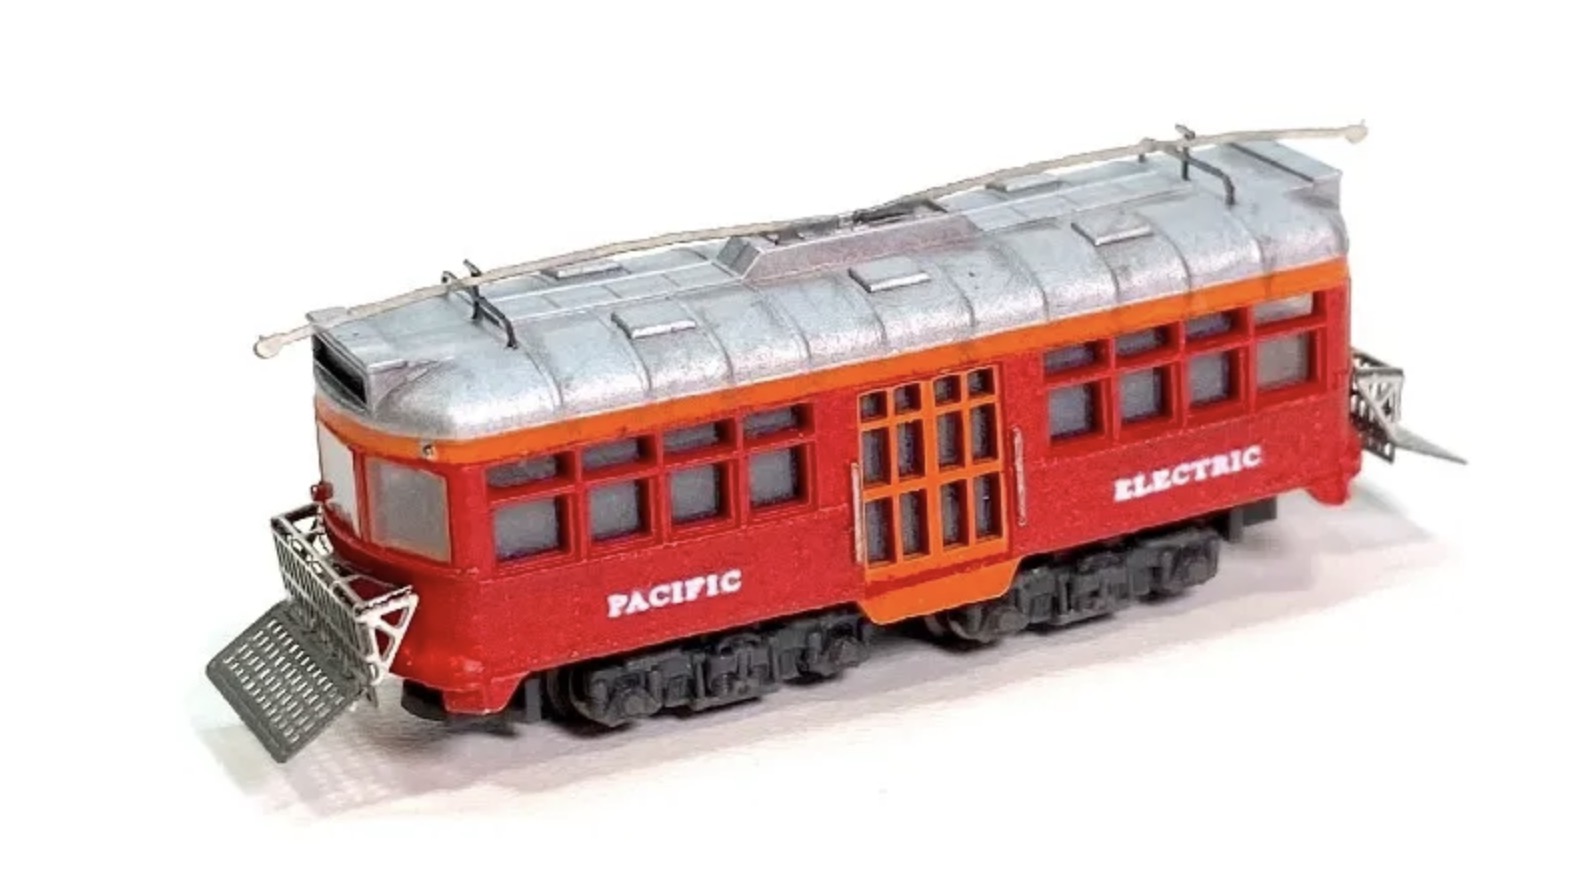 Z Scale - Showcase Miniatures - 4046 - Passenger Car, Trolley, Roger Rabbit - Pacific Electric